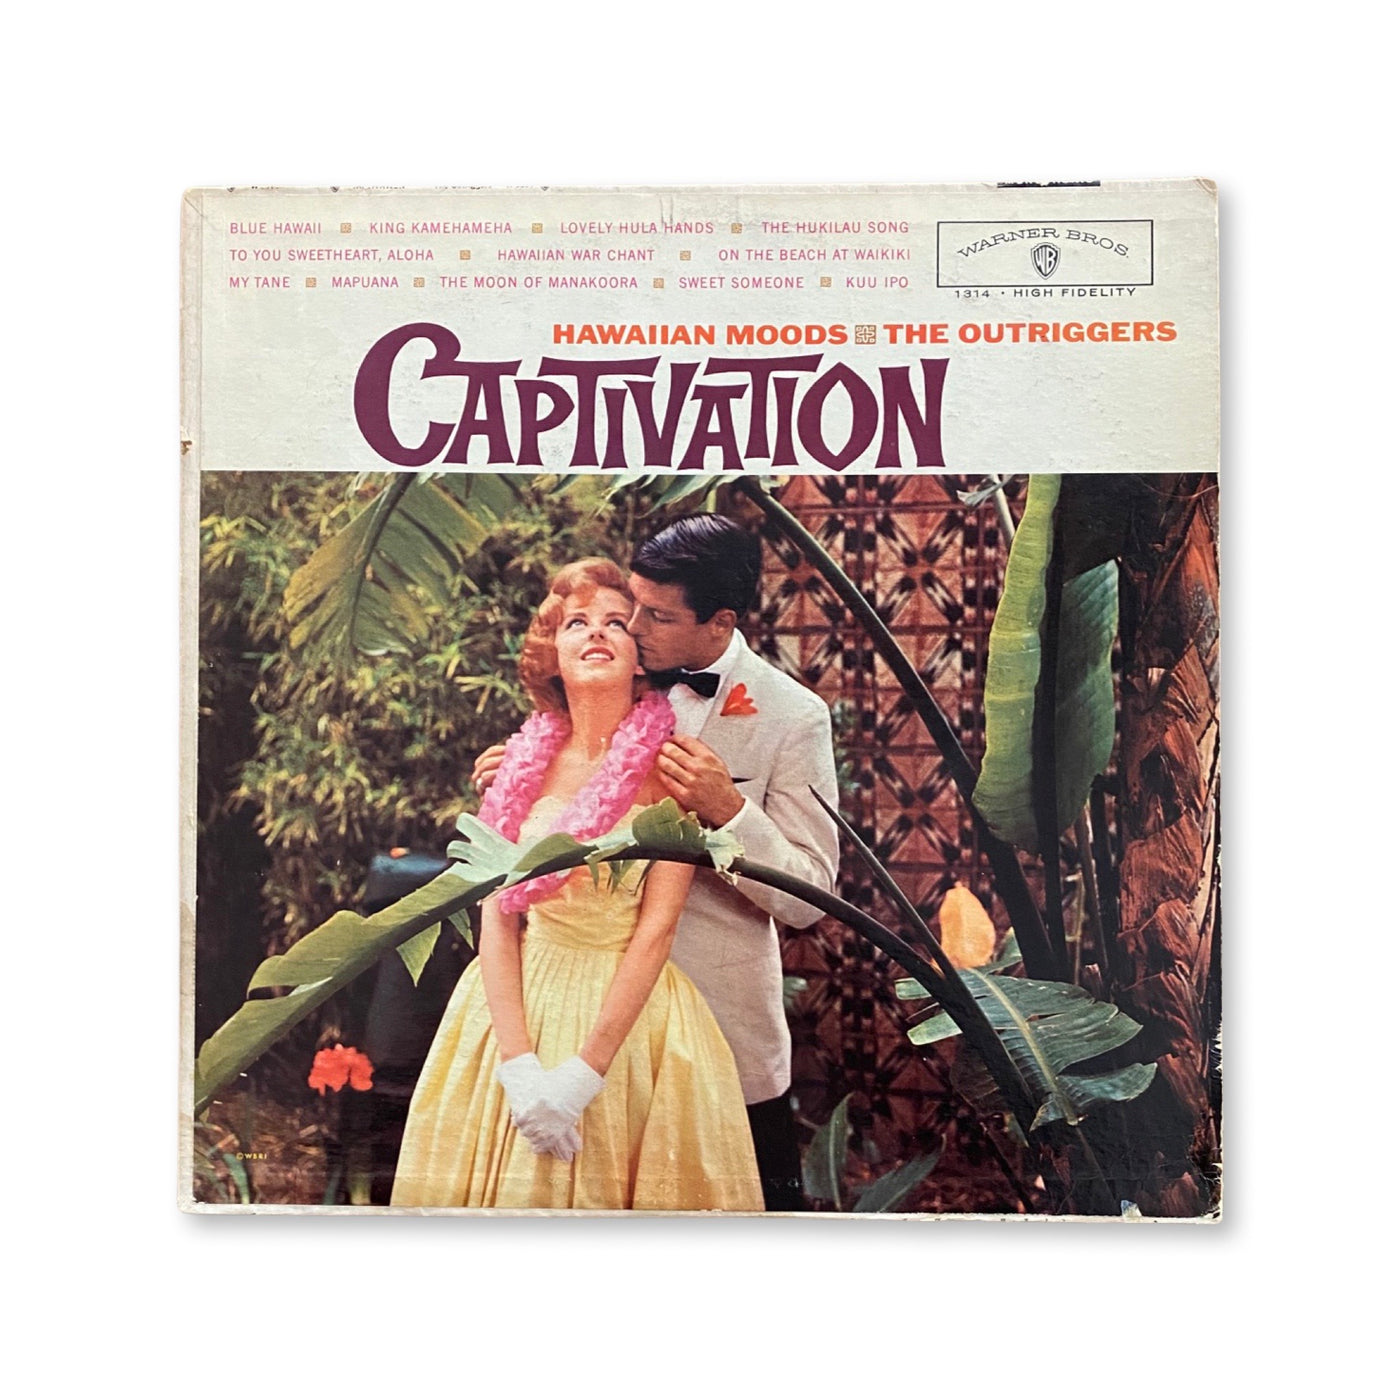 The Outriggers - Captivation (Hawaiian Moods)